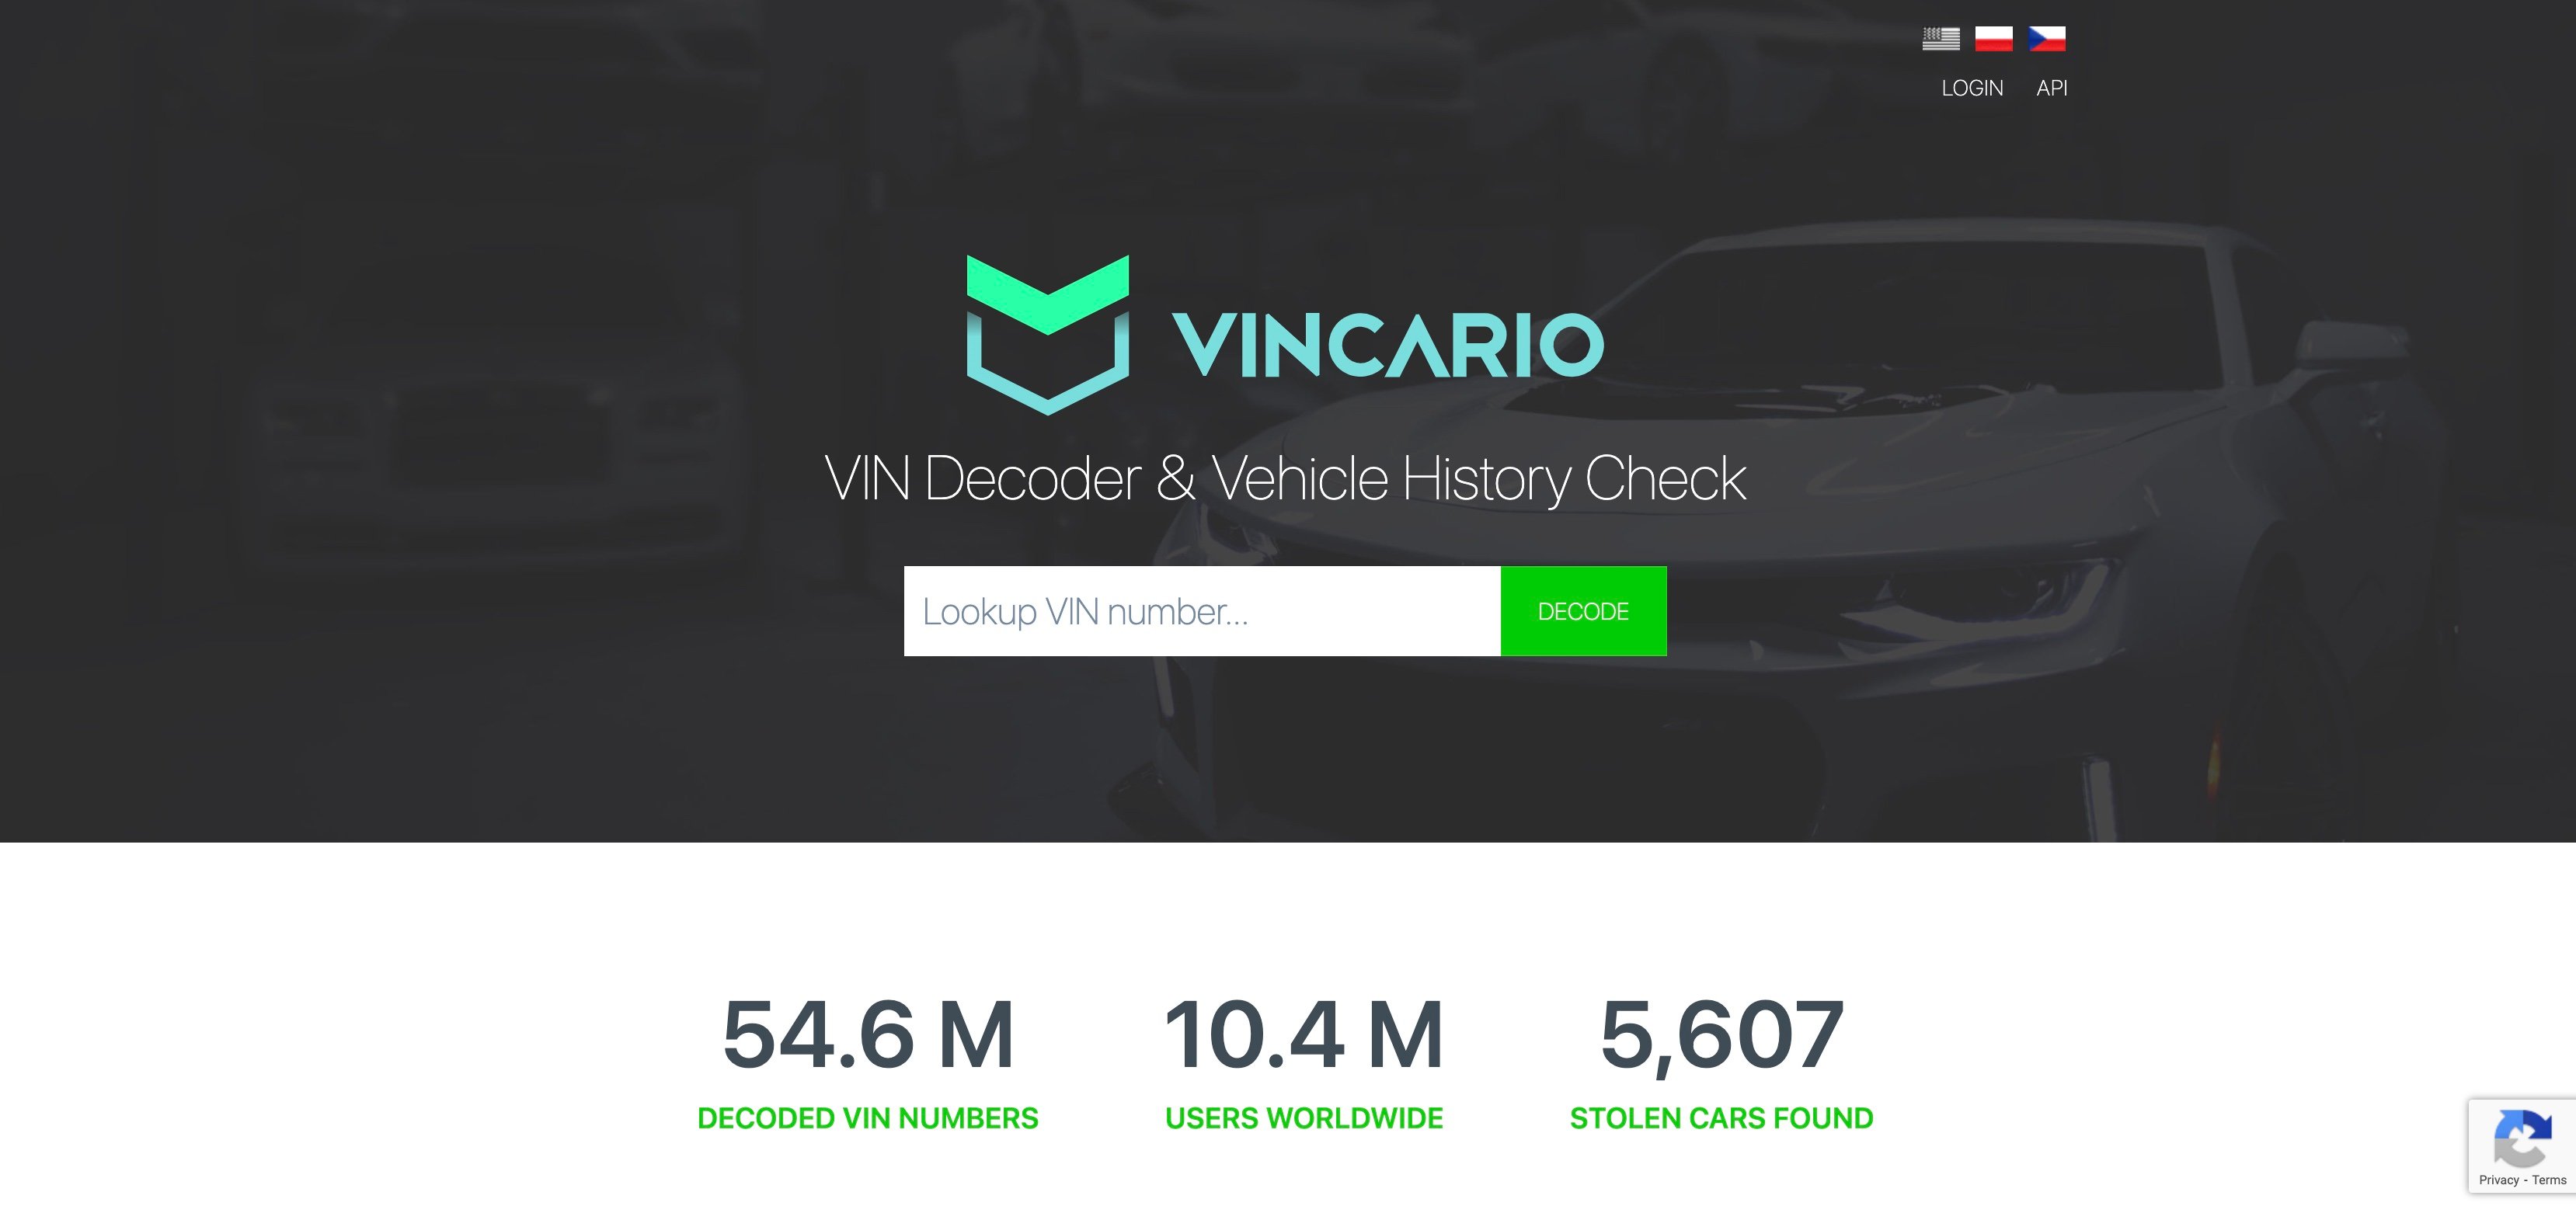 homepage overview of car history website Vindecoder